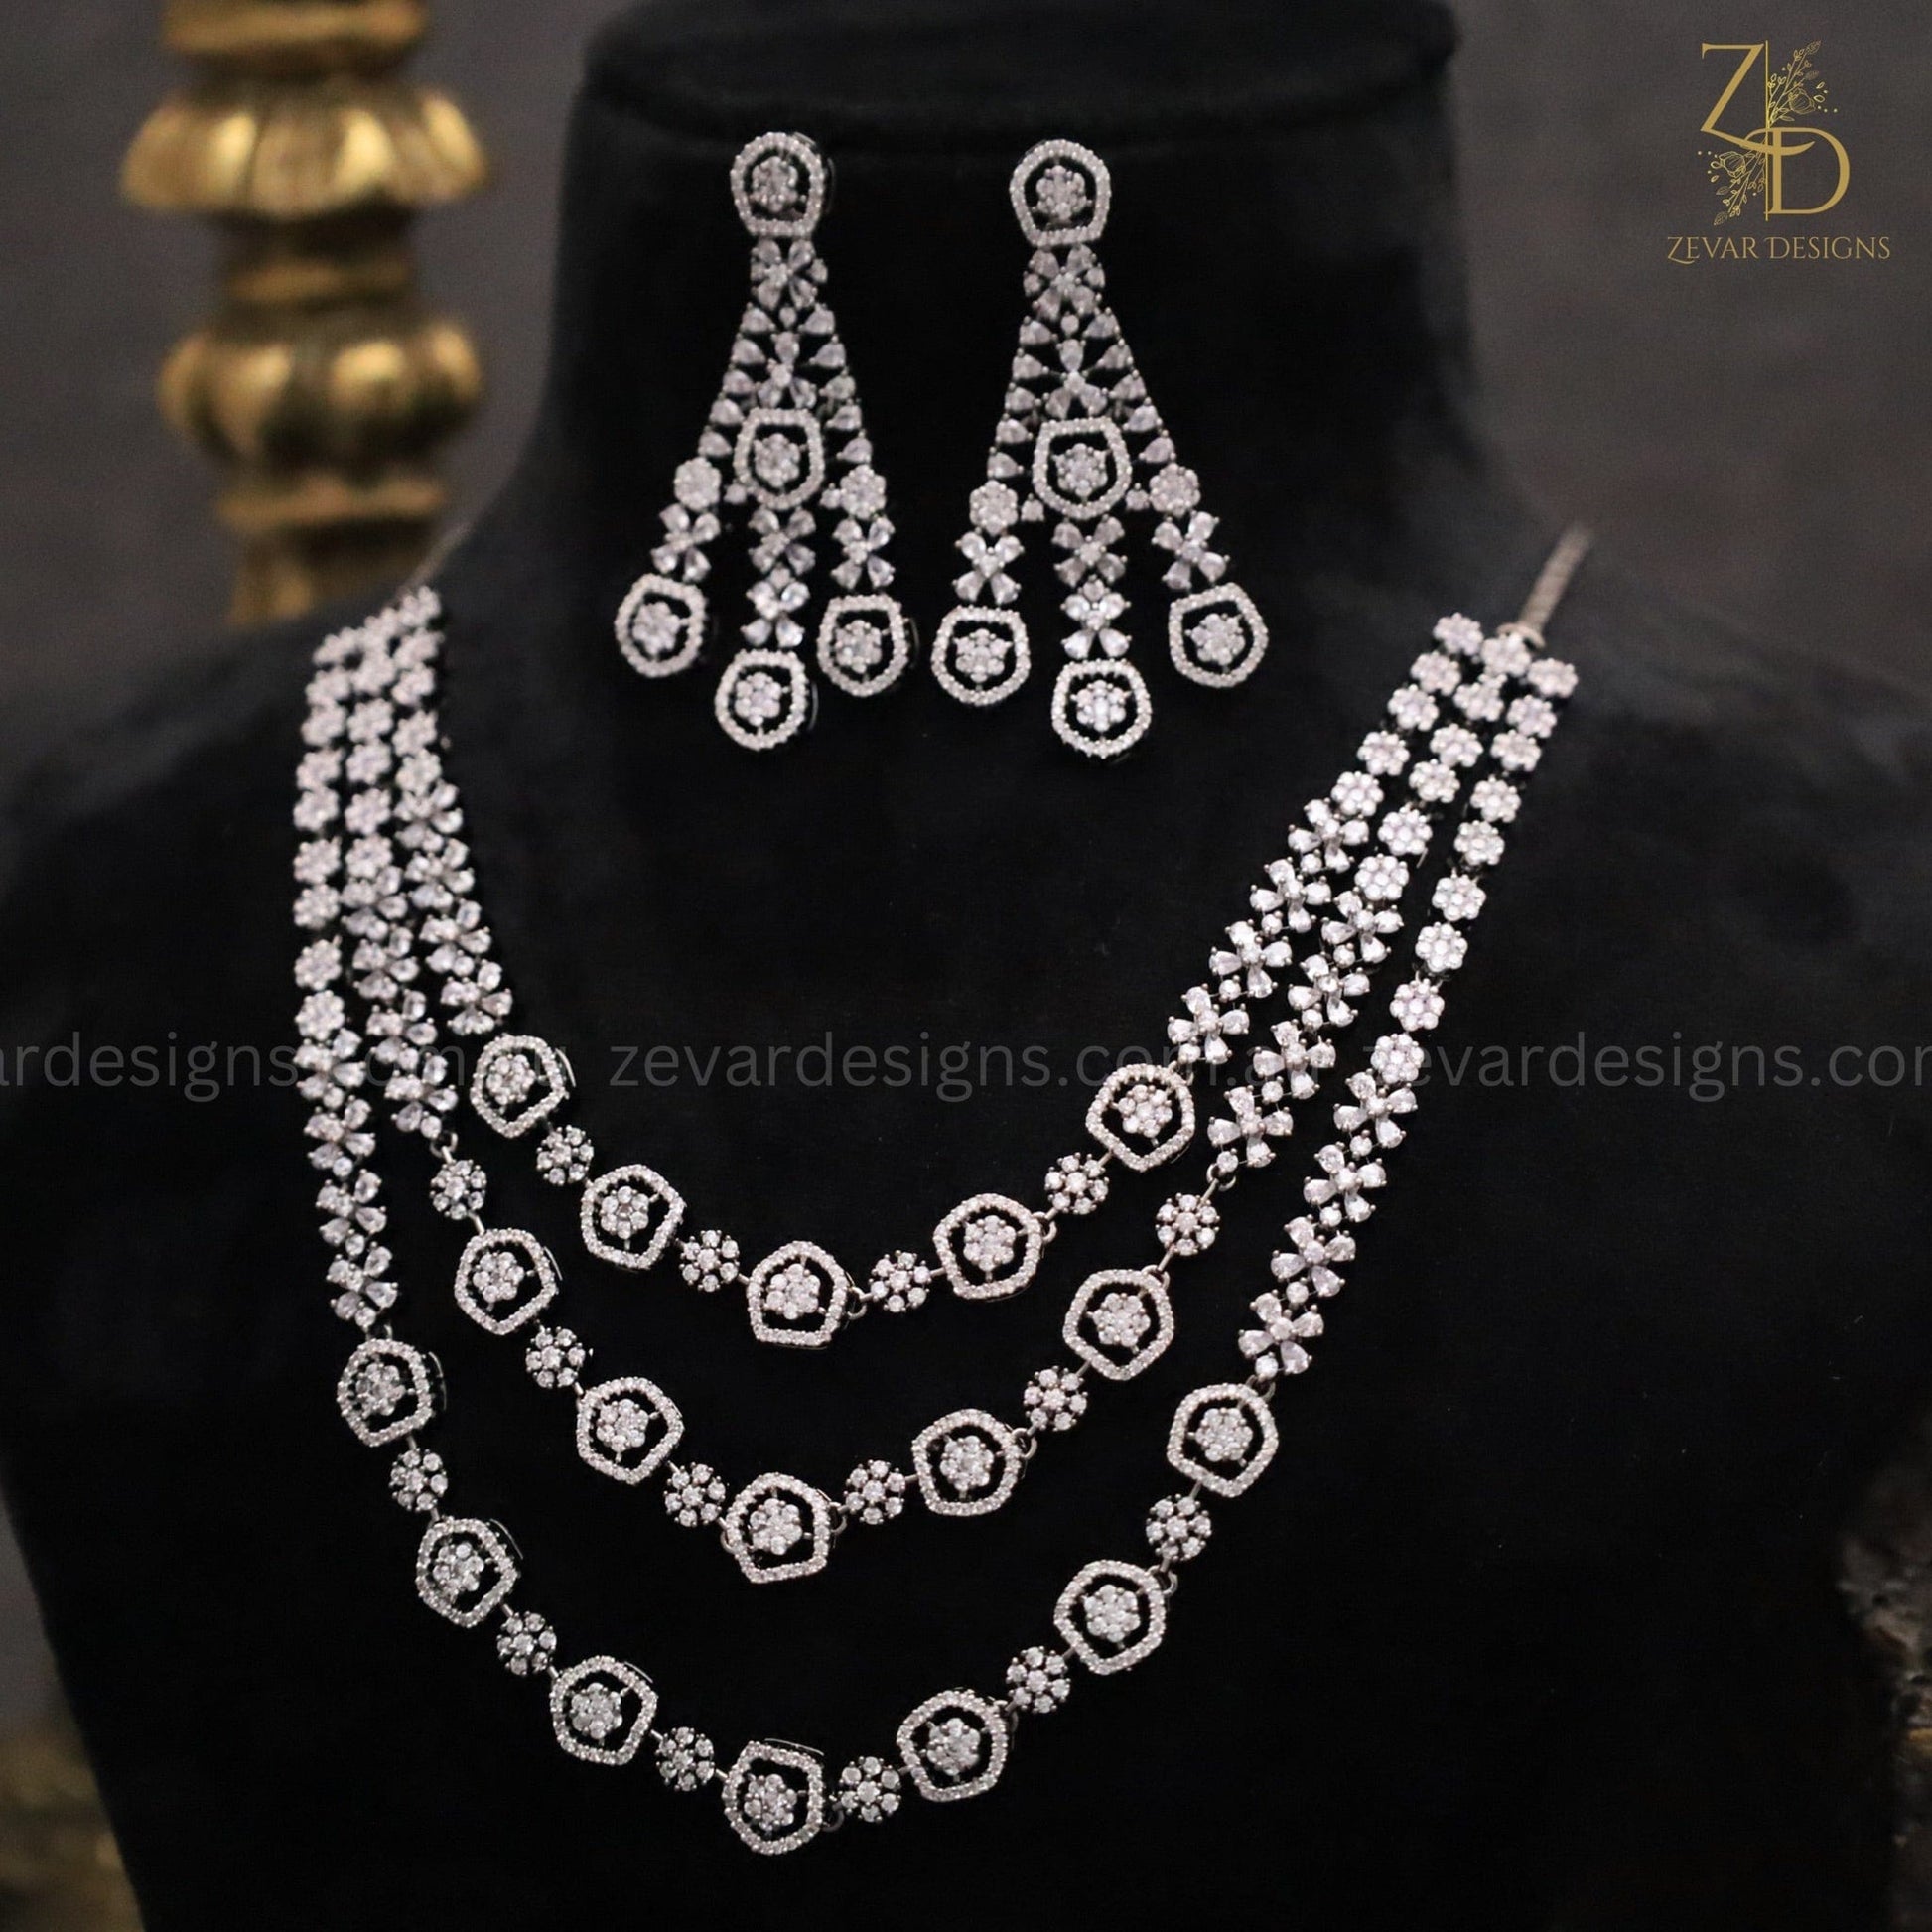 Zevar Designs Necklace Sets - AD Layered AD/Zircon Necklace Set - Black/Silver Finish